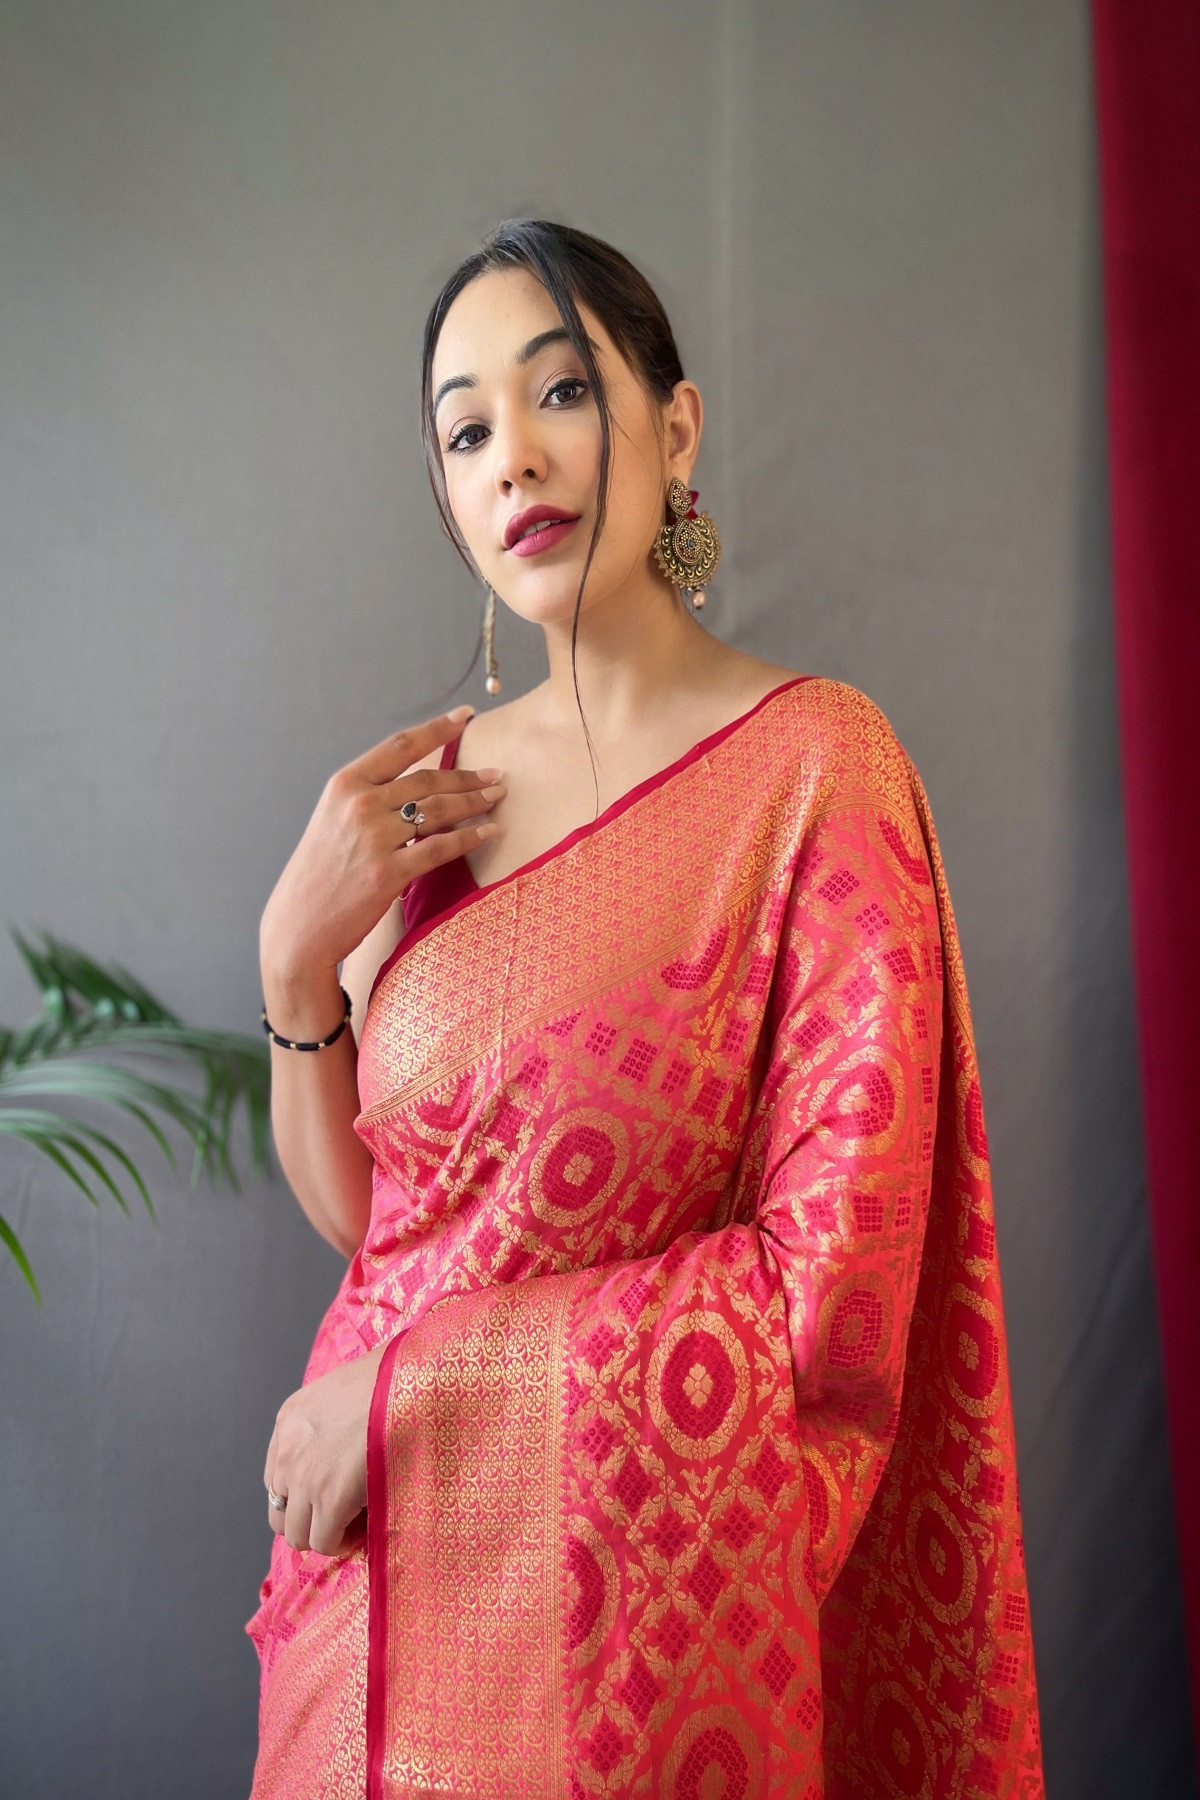 Patola Silk saree gold Zari meenakari weave border Pallu - Pink-orange